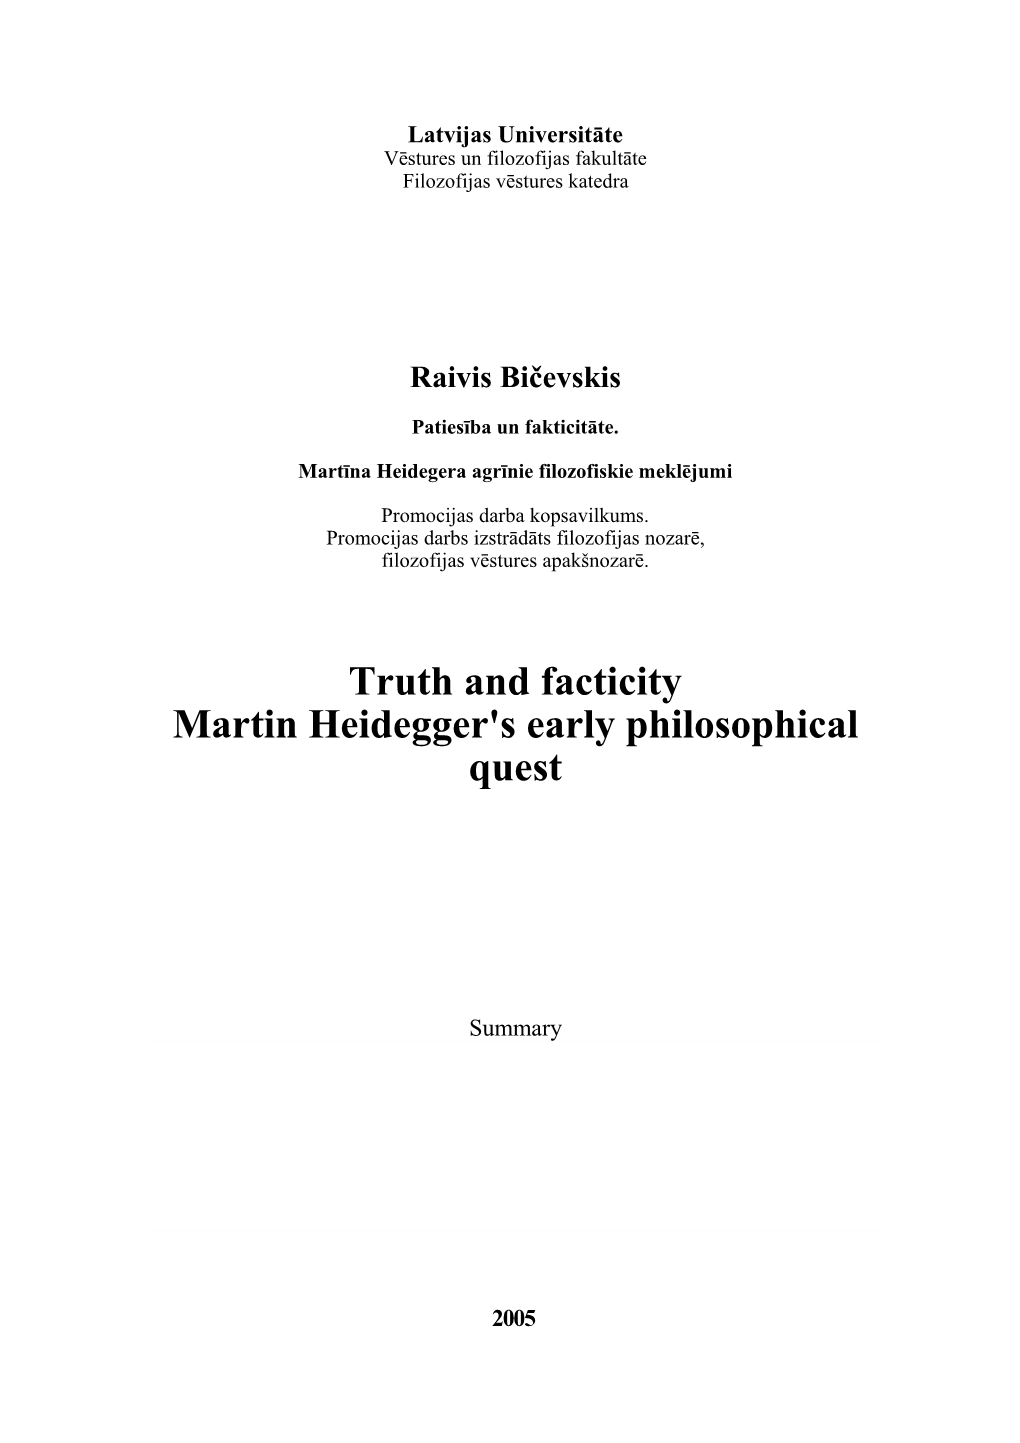 Raivis Bičevskis. Truth and Facticity. Martin Heidegger's Early Philosophical Quest. Promotion